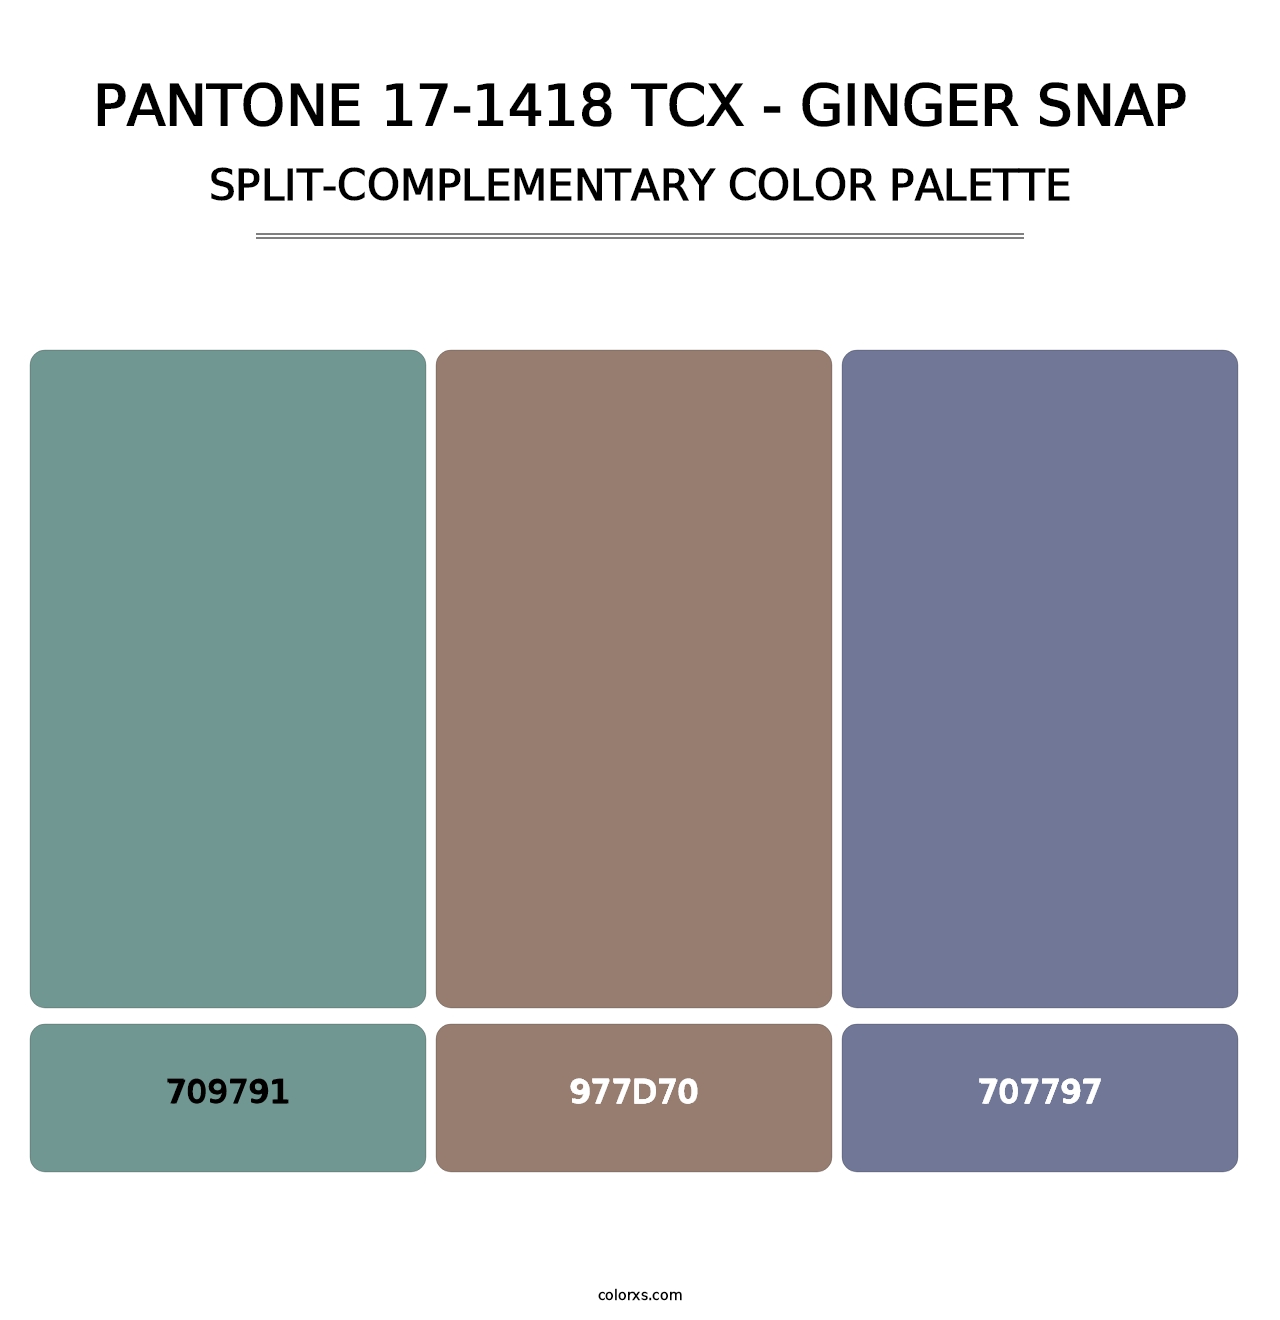 PANTONE 17-1418 TCX - Ginger Snap - Split-Complementary Color Palette